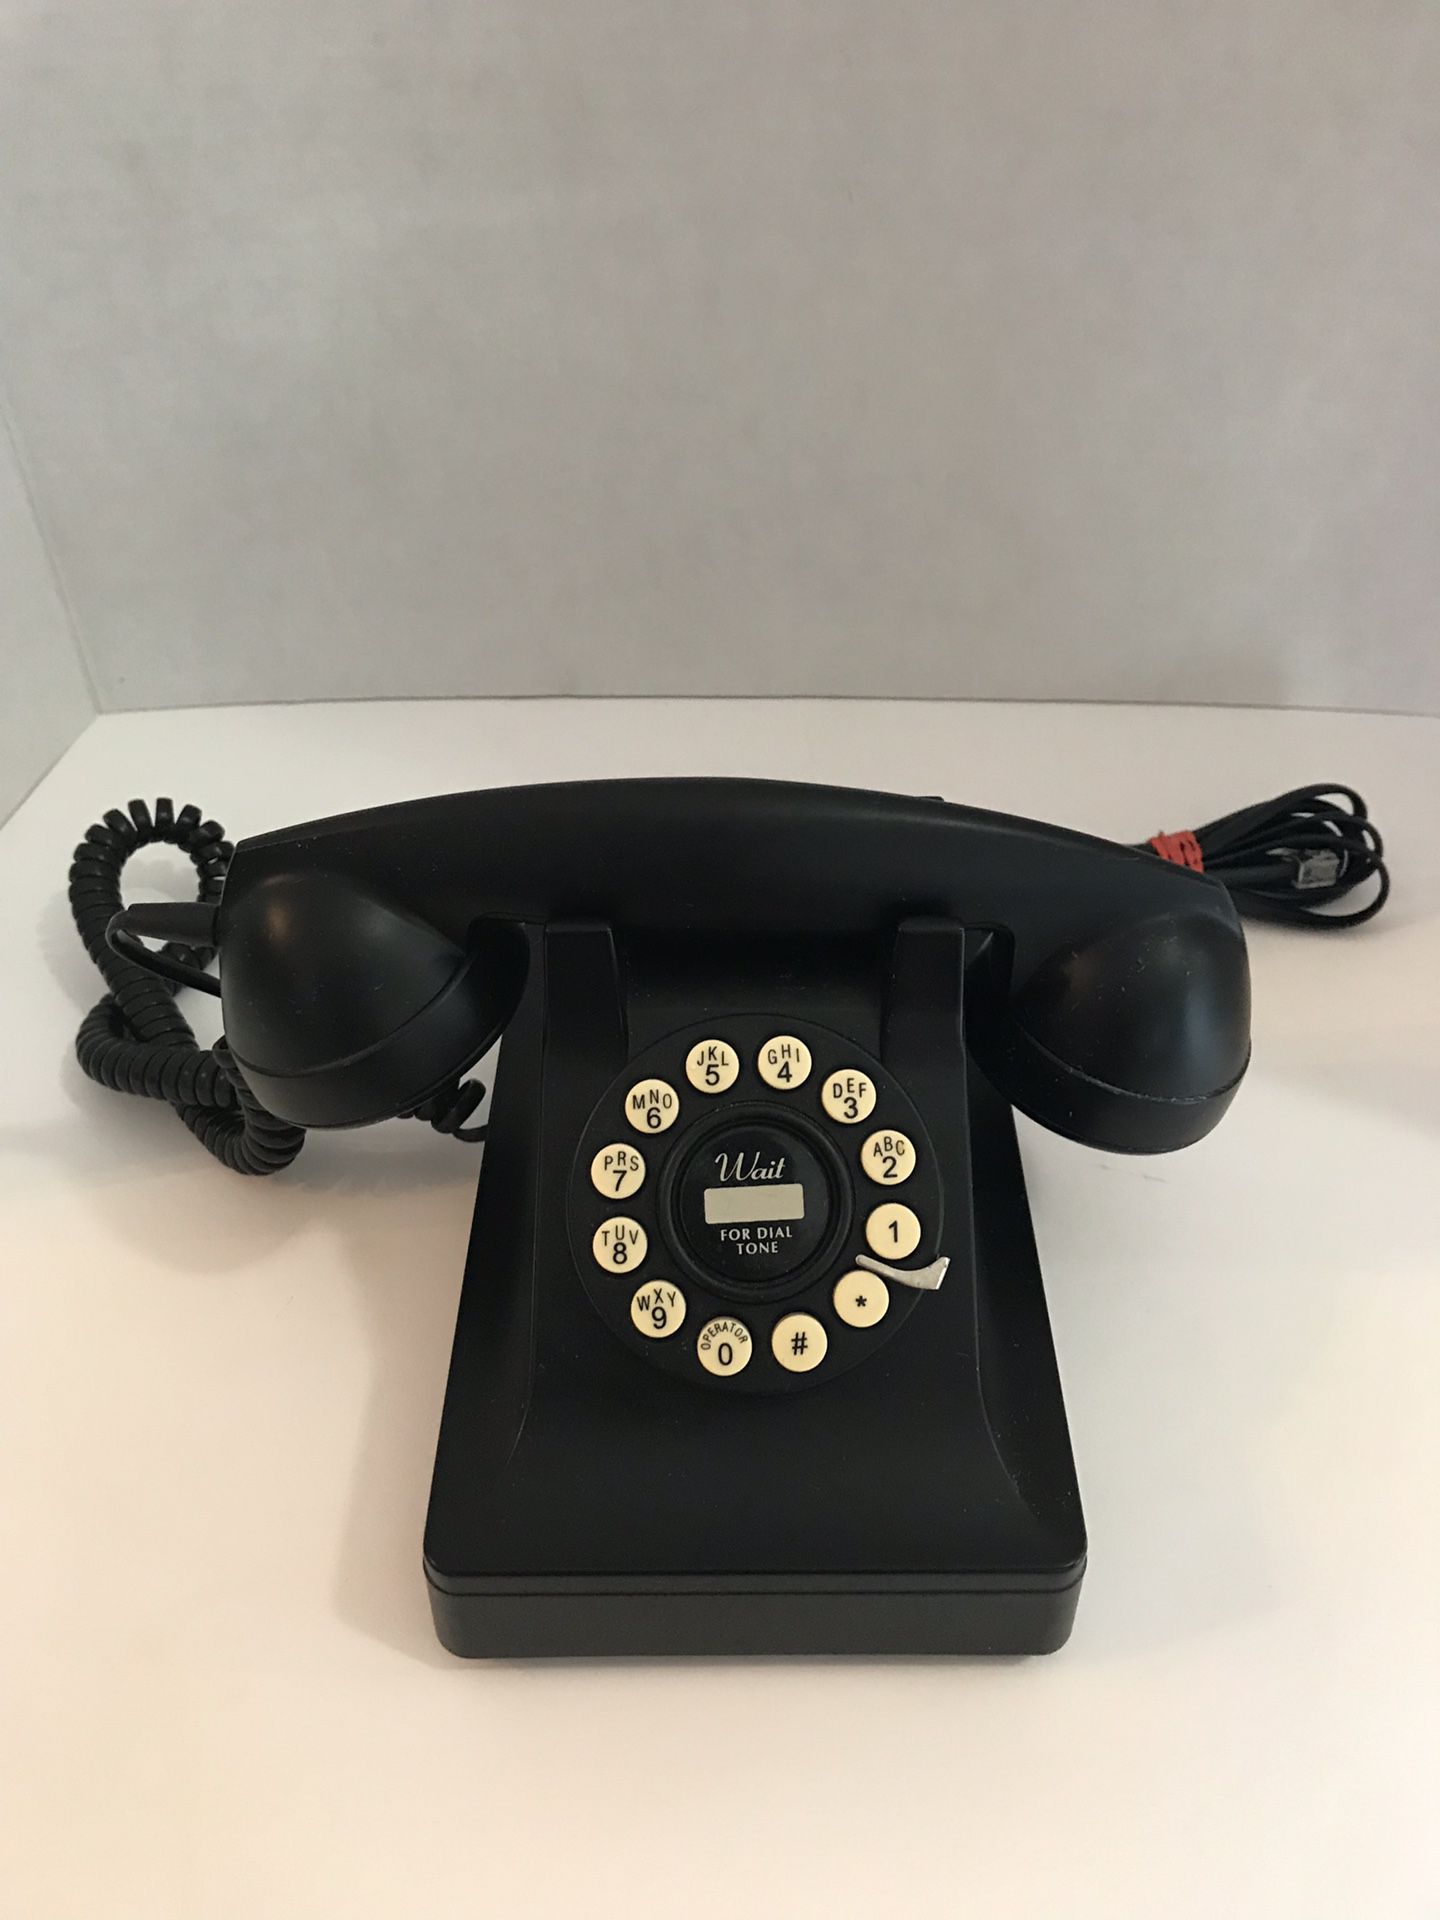 Vintage Crosley Model # 302 Desk phone